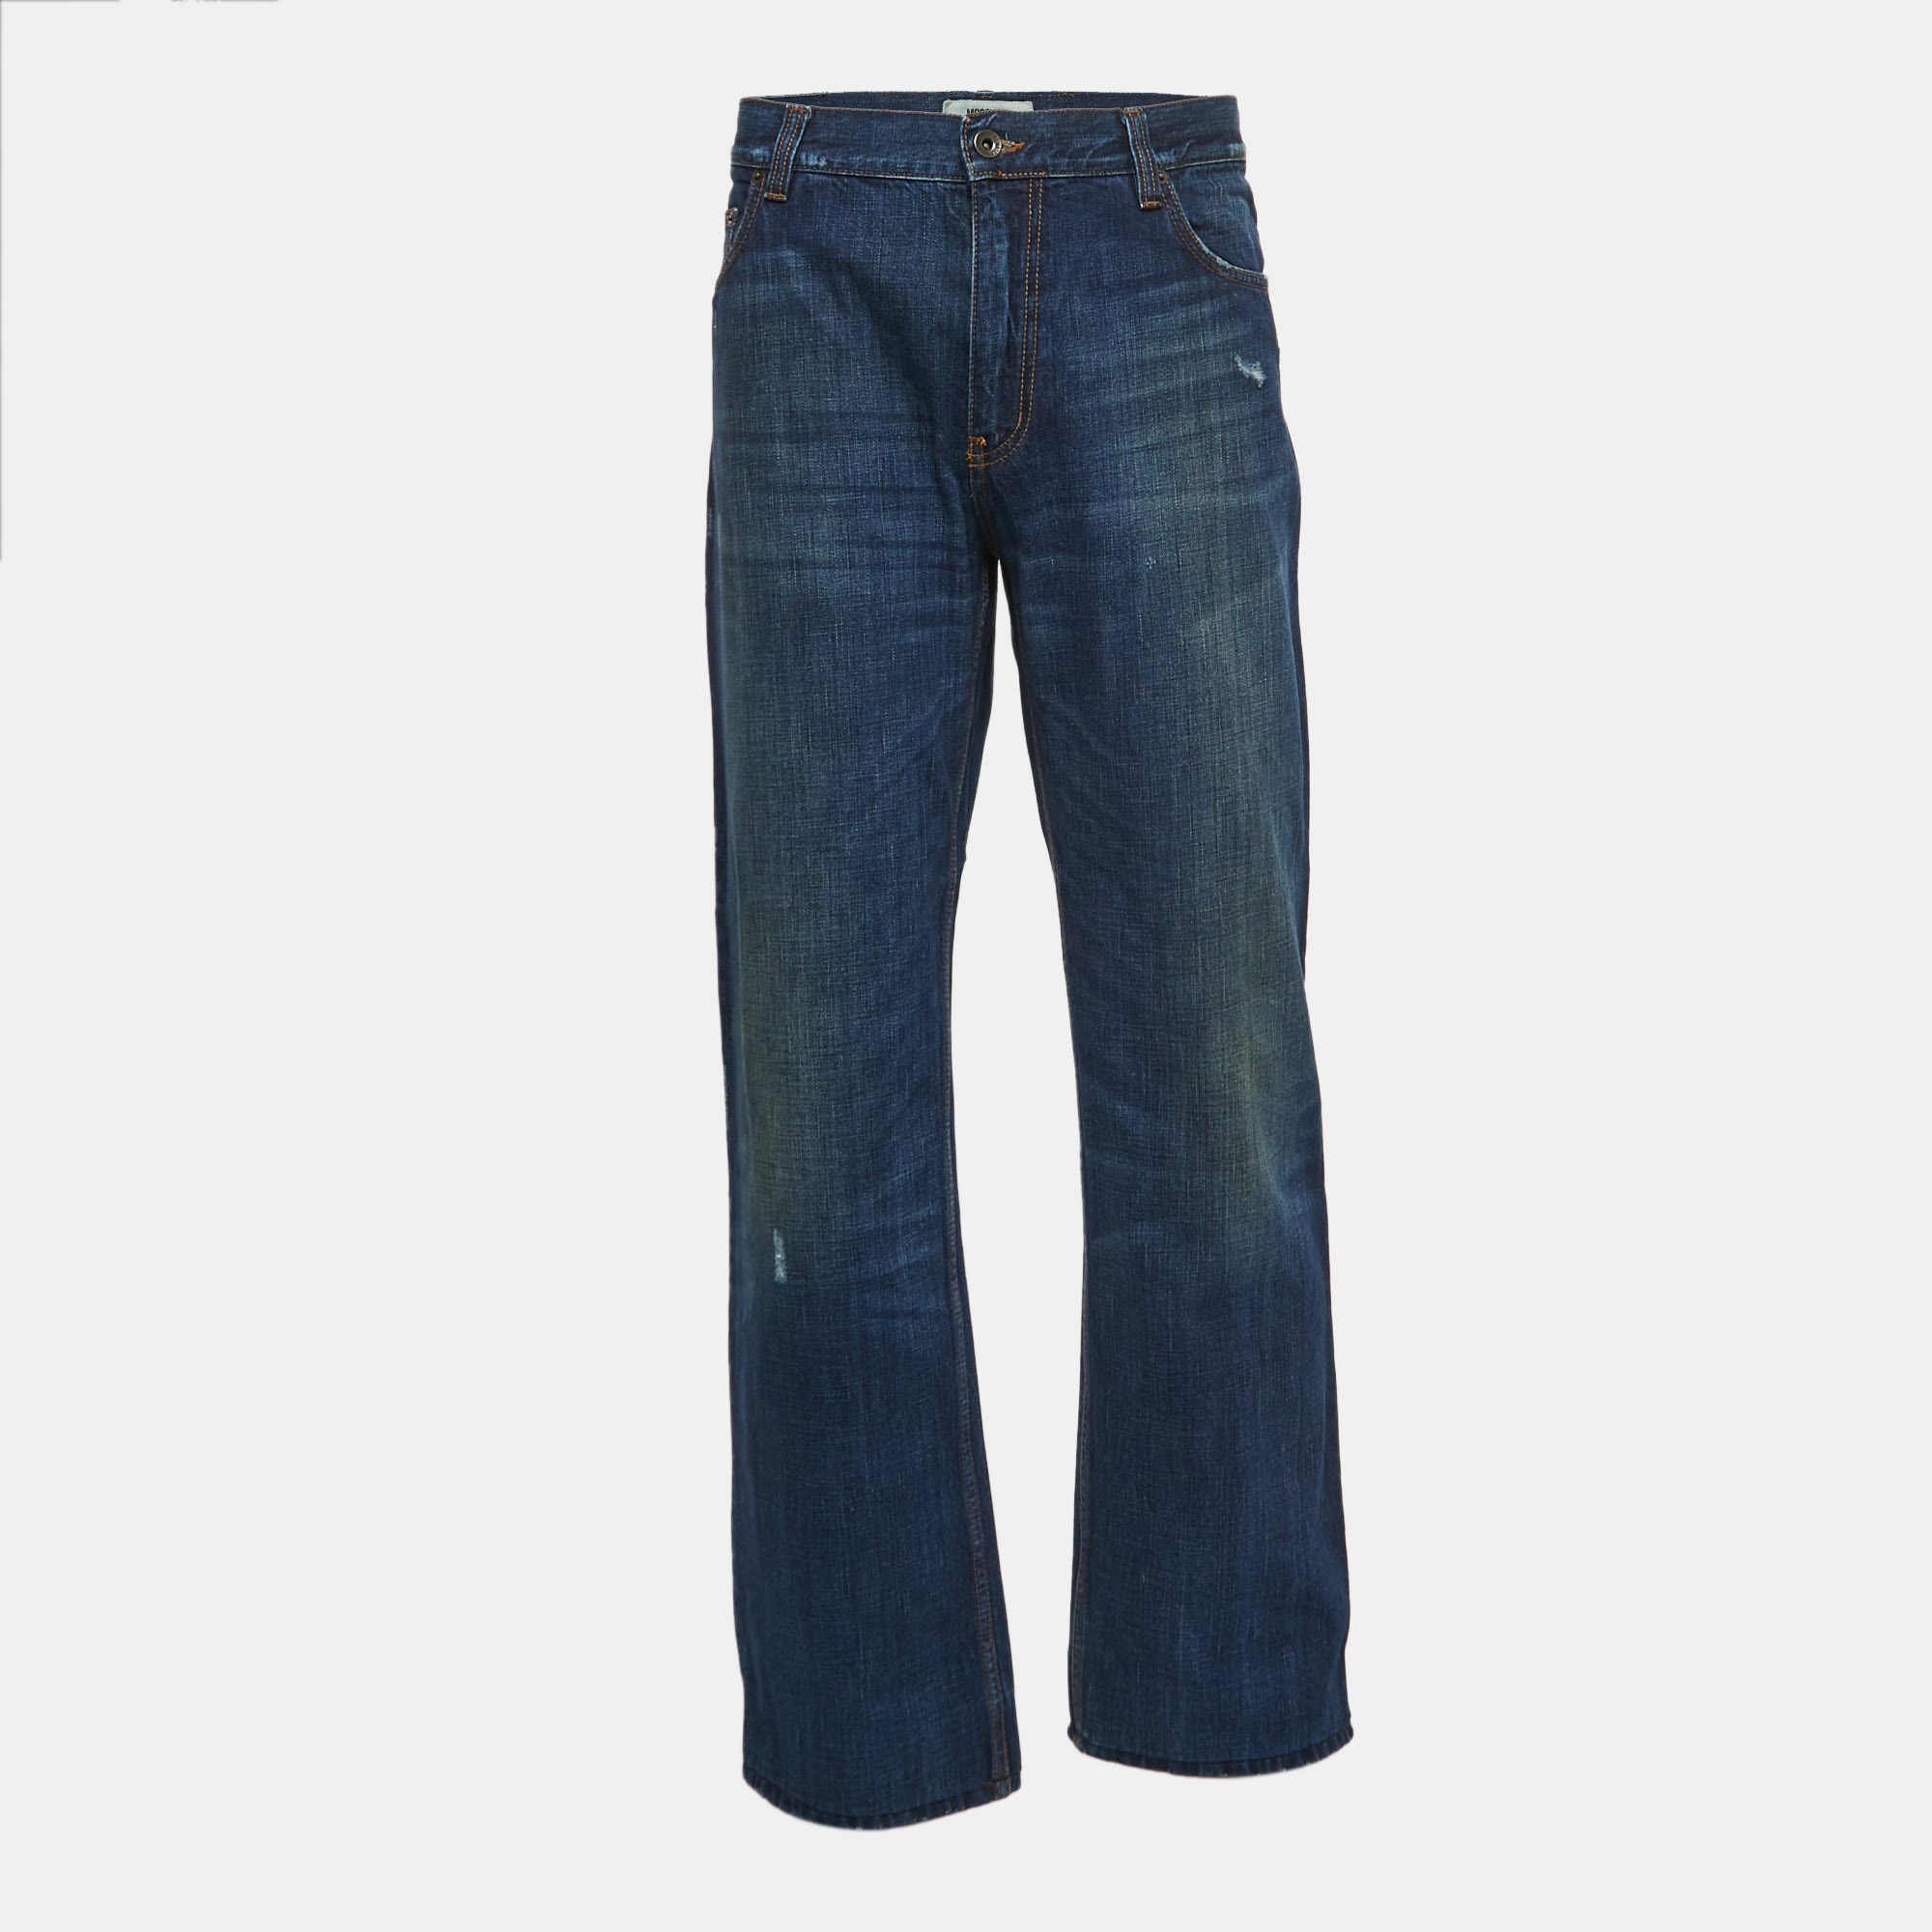 Moschino Jeans Blue Washed Denim Jeans 3XL Waist 38